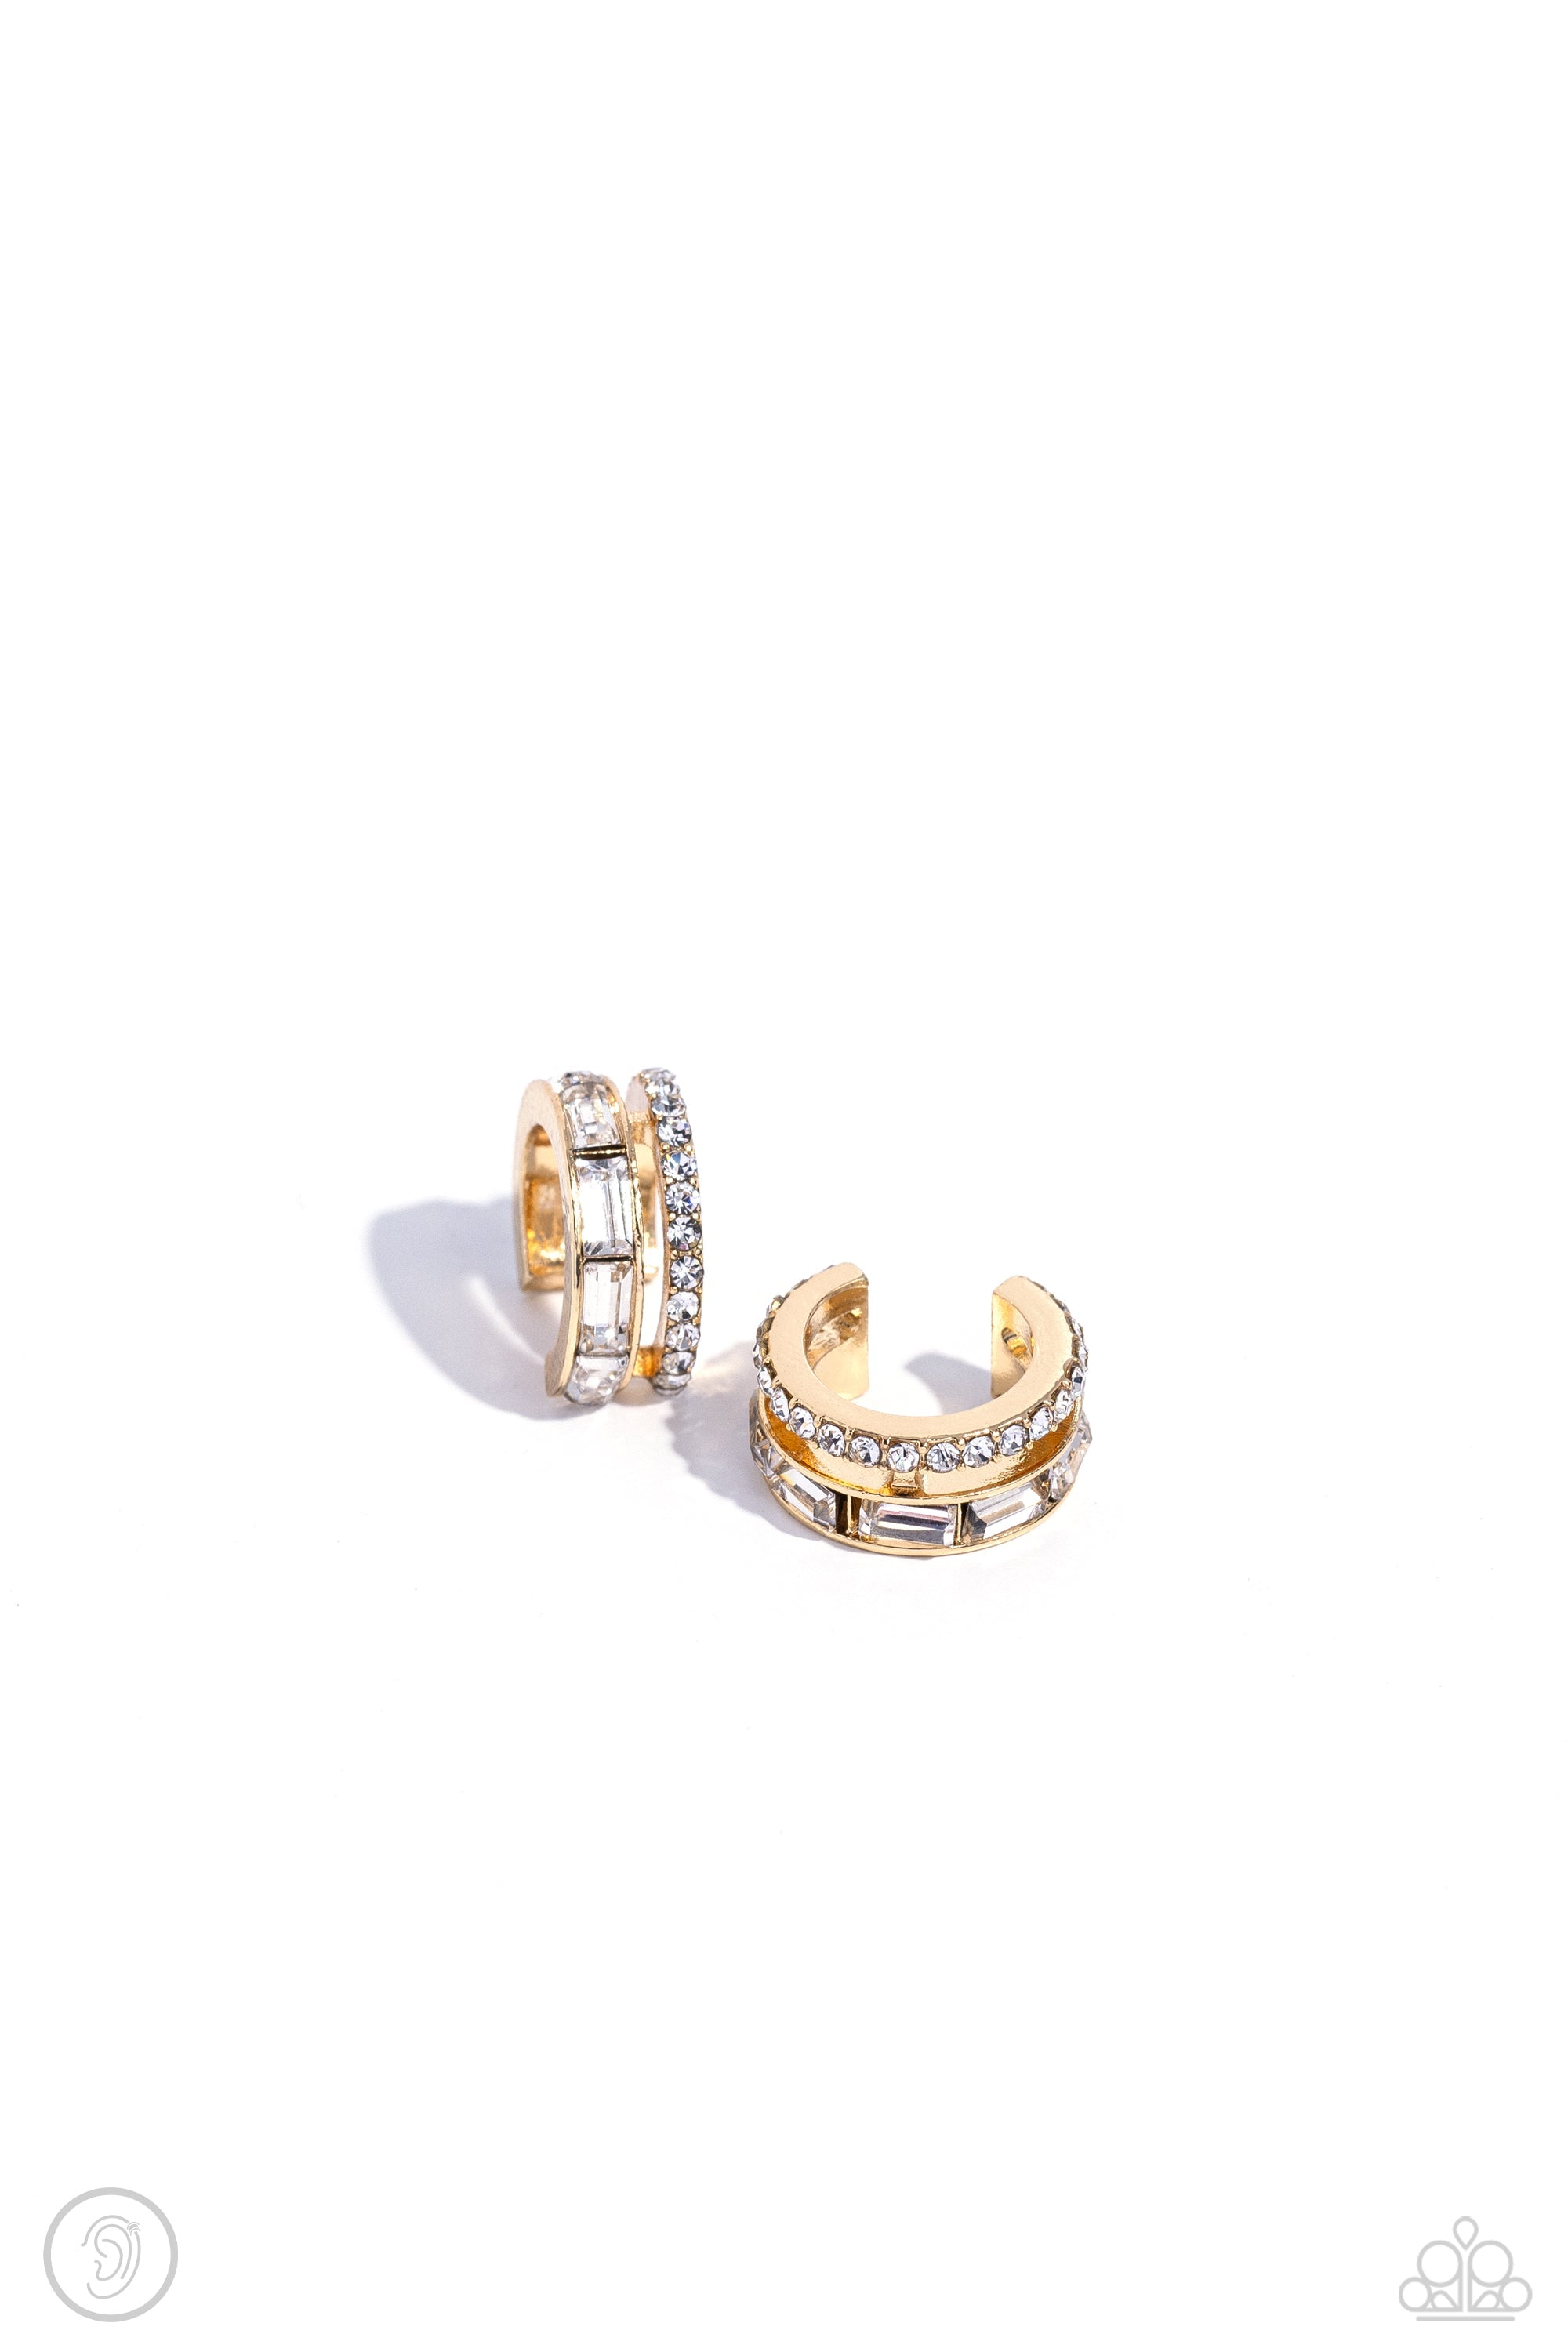 Dont Sweat The Small CUFF Gold & White Rhinestone Cuff Earrings - Paparazzi Accessories- lightbox - CarasShop.com - $5 Jewelry by Cara Jewels